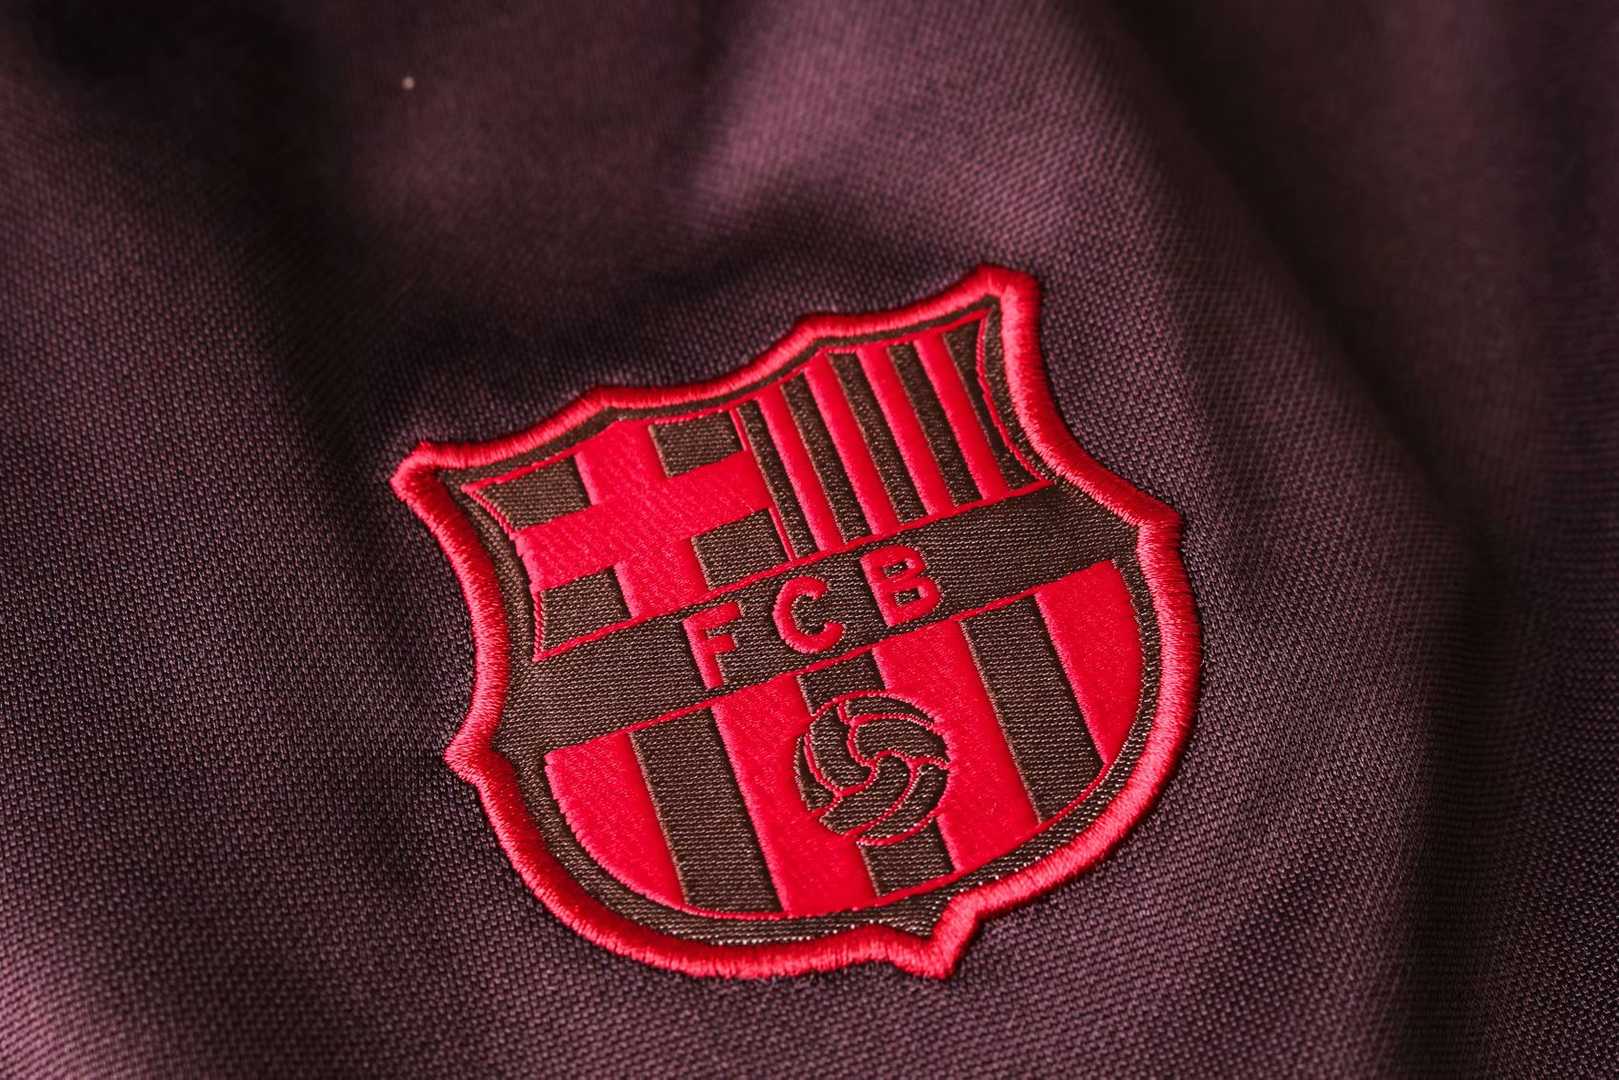 2019/20 Barcelona High Neck Blue Mens Soccer Training Suit(Jacket + Pants)